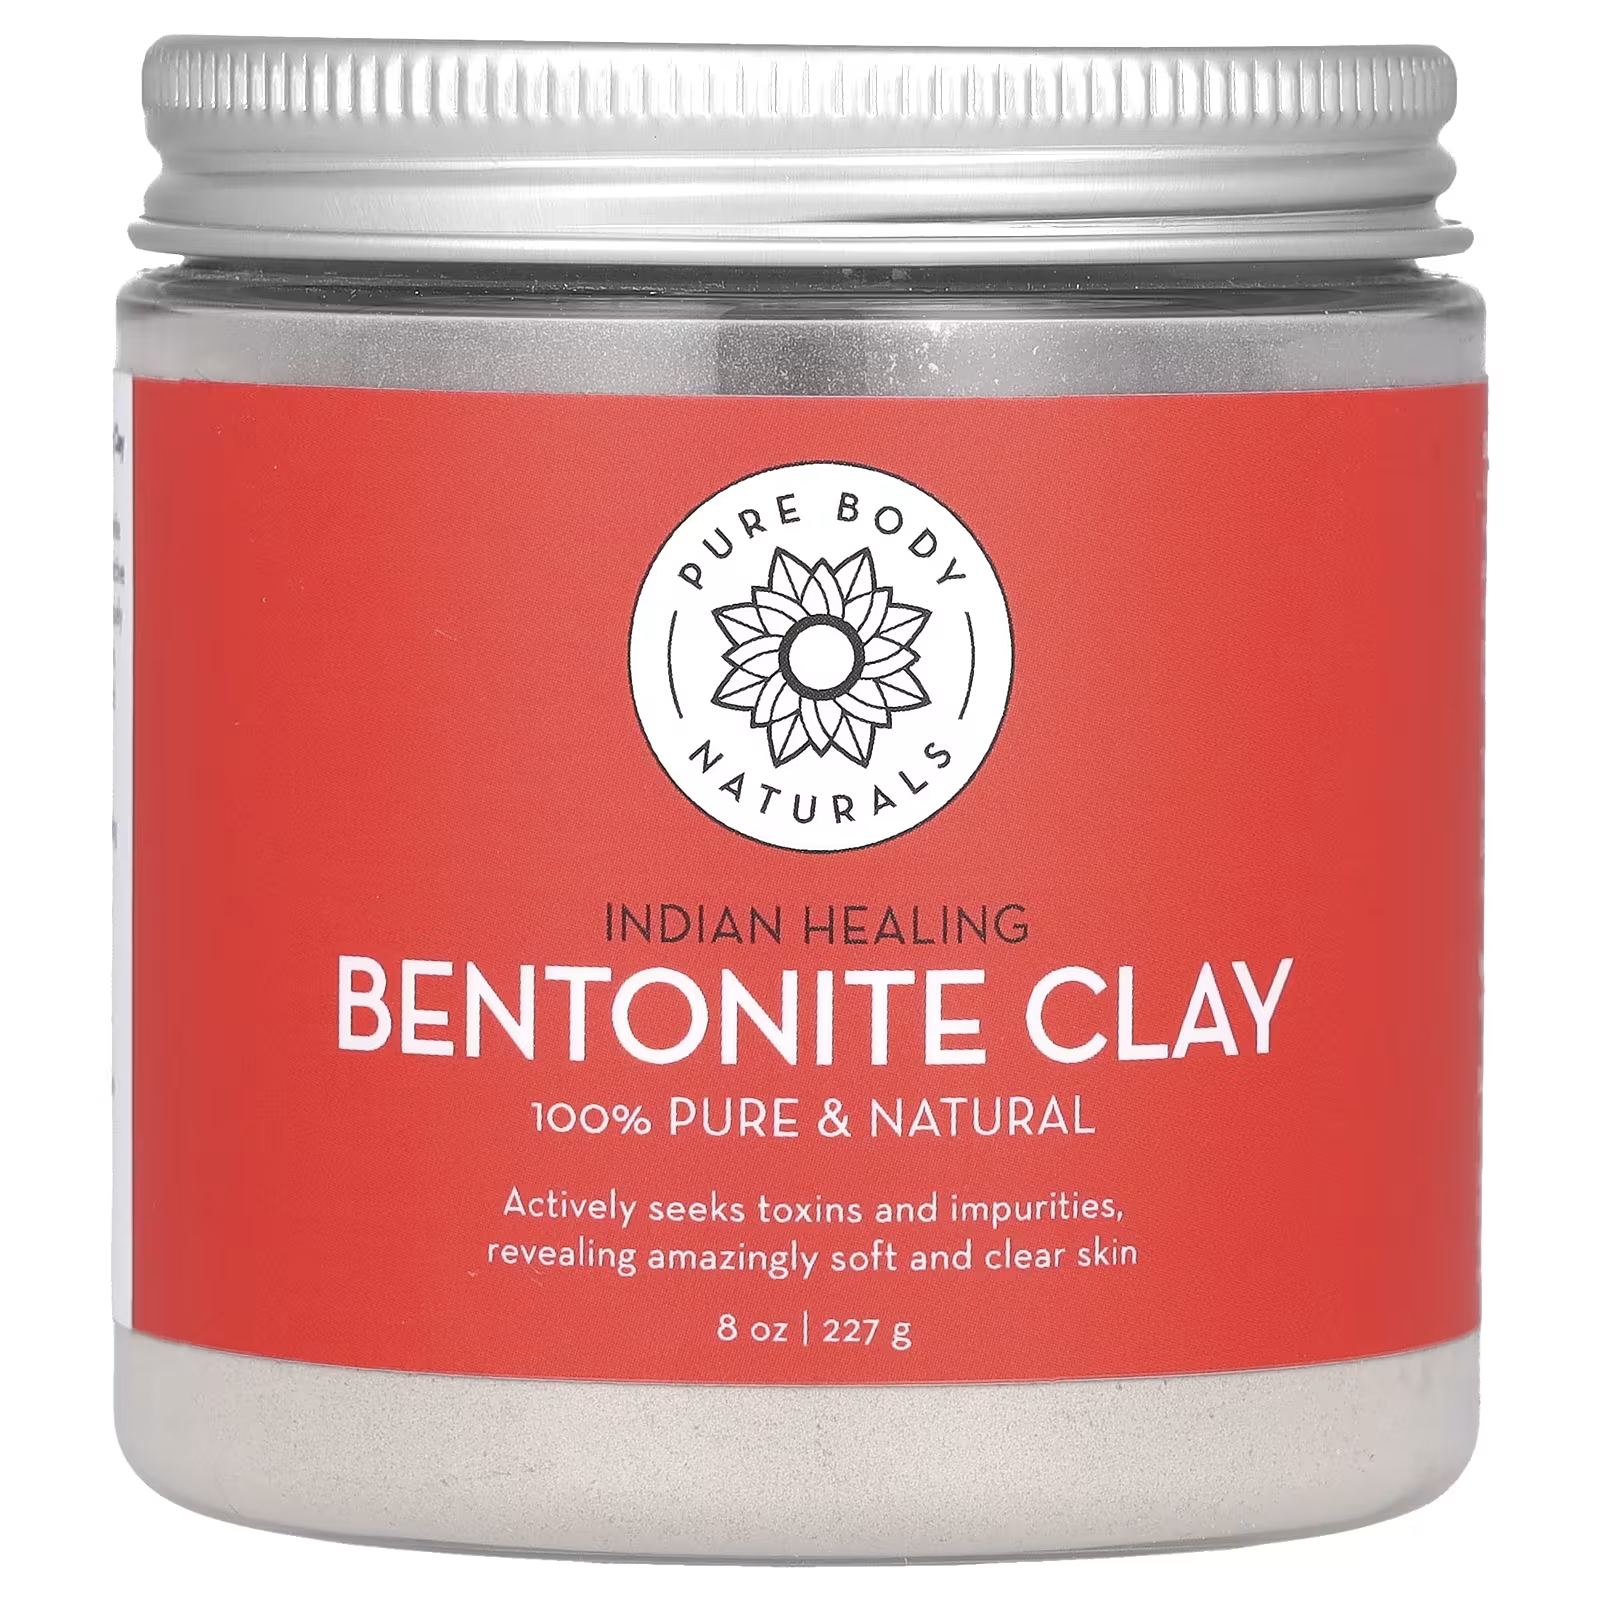 Макска для лица Pure Body Naturals Indian Healing Bentonite Clay, 227 г